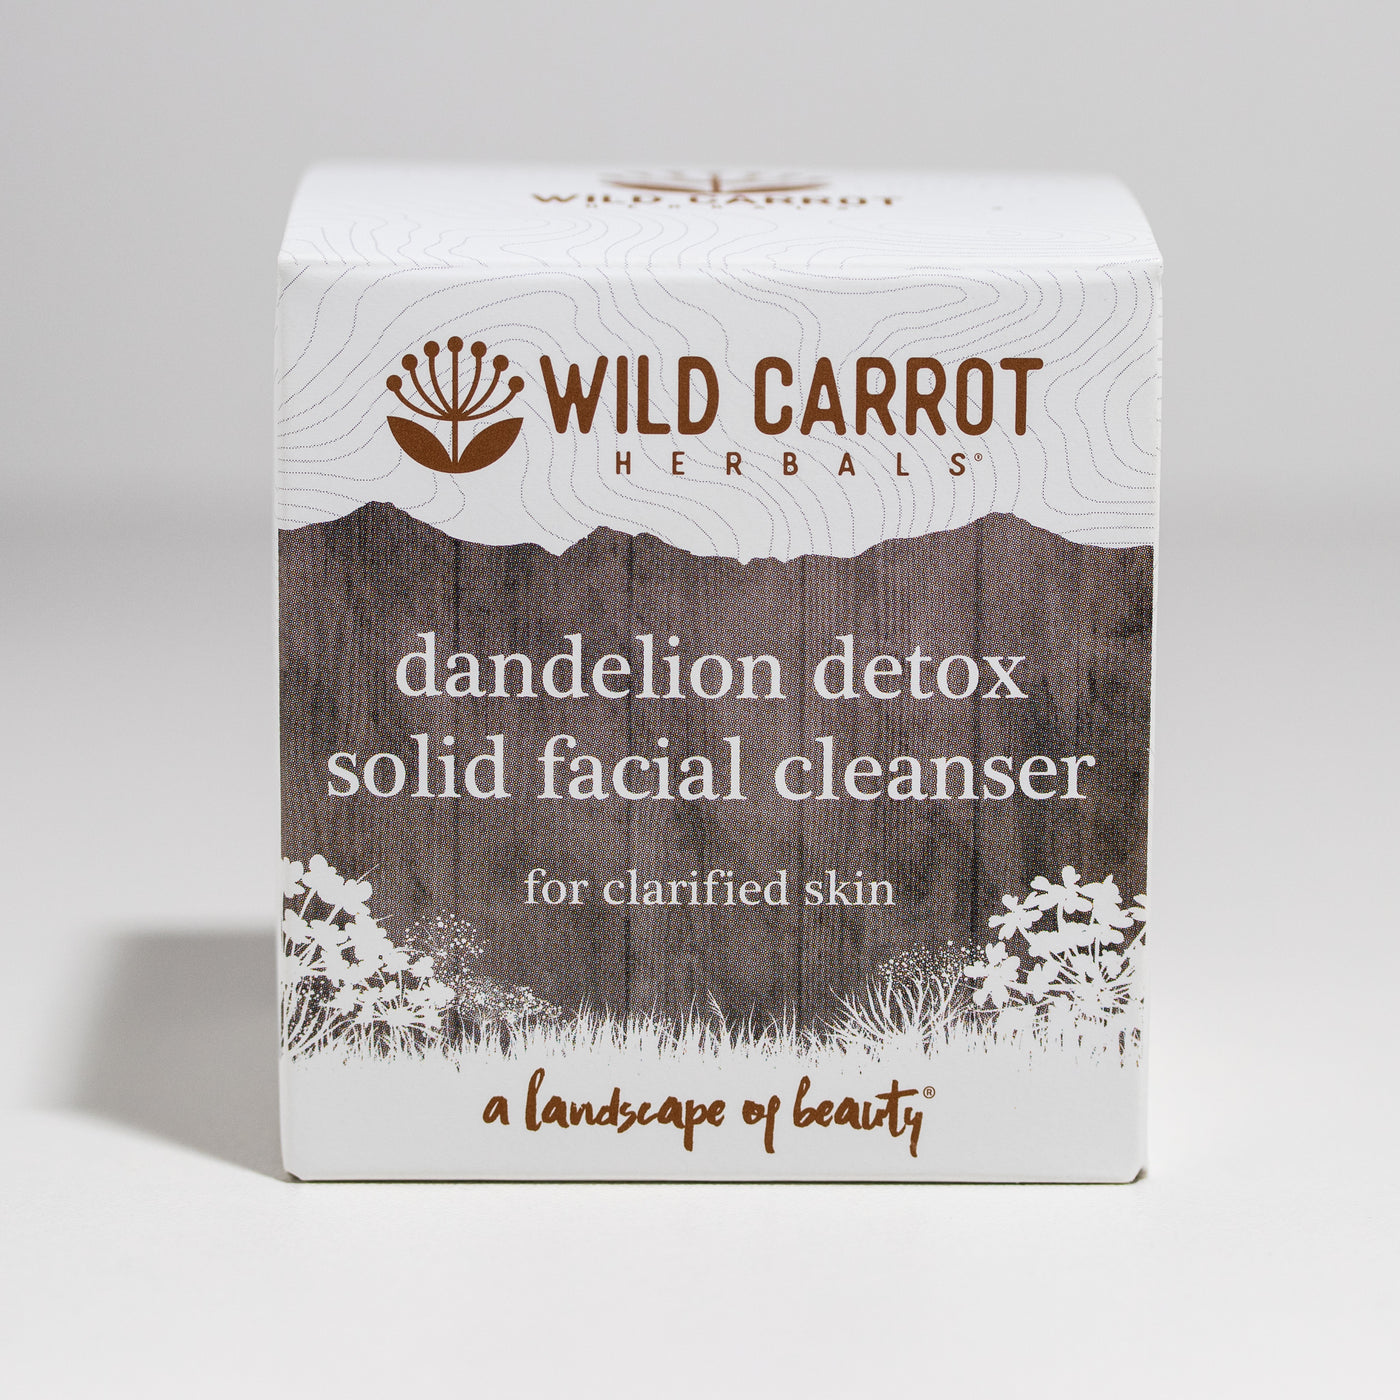 Dandelion Detox Solid Facial Cleanser for Clarified Skin